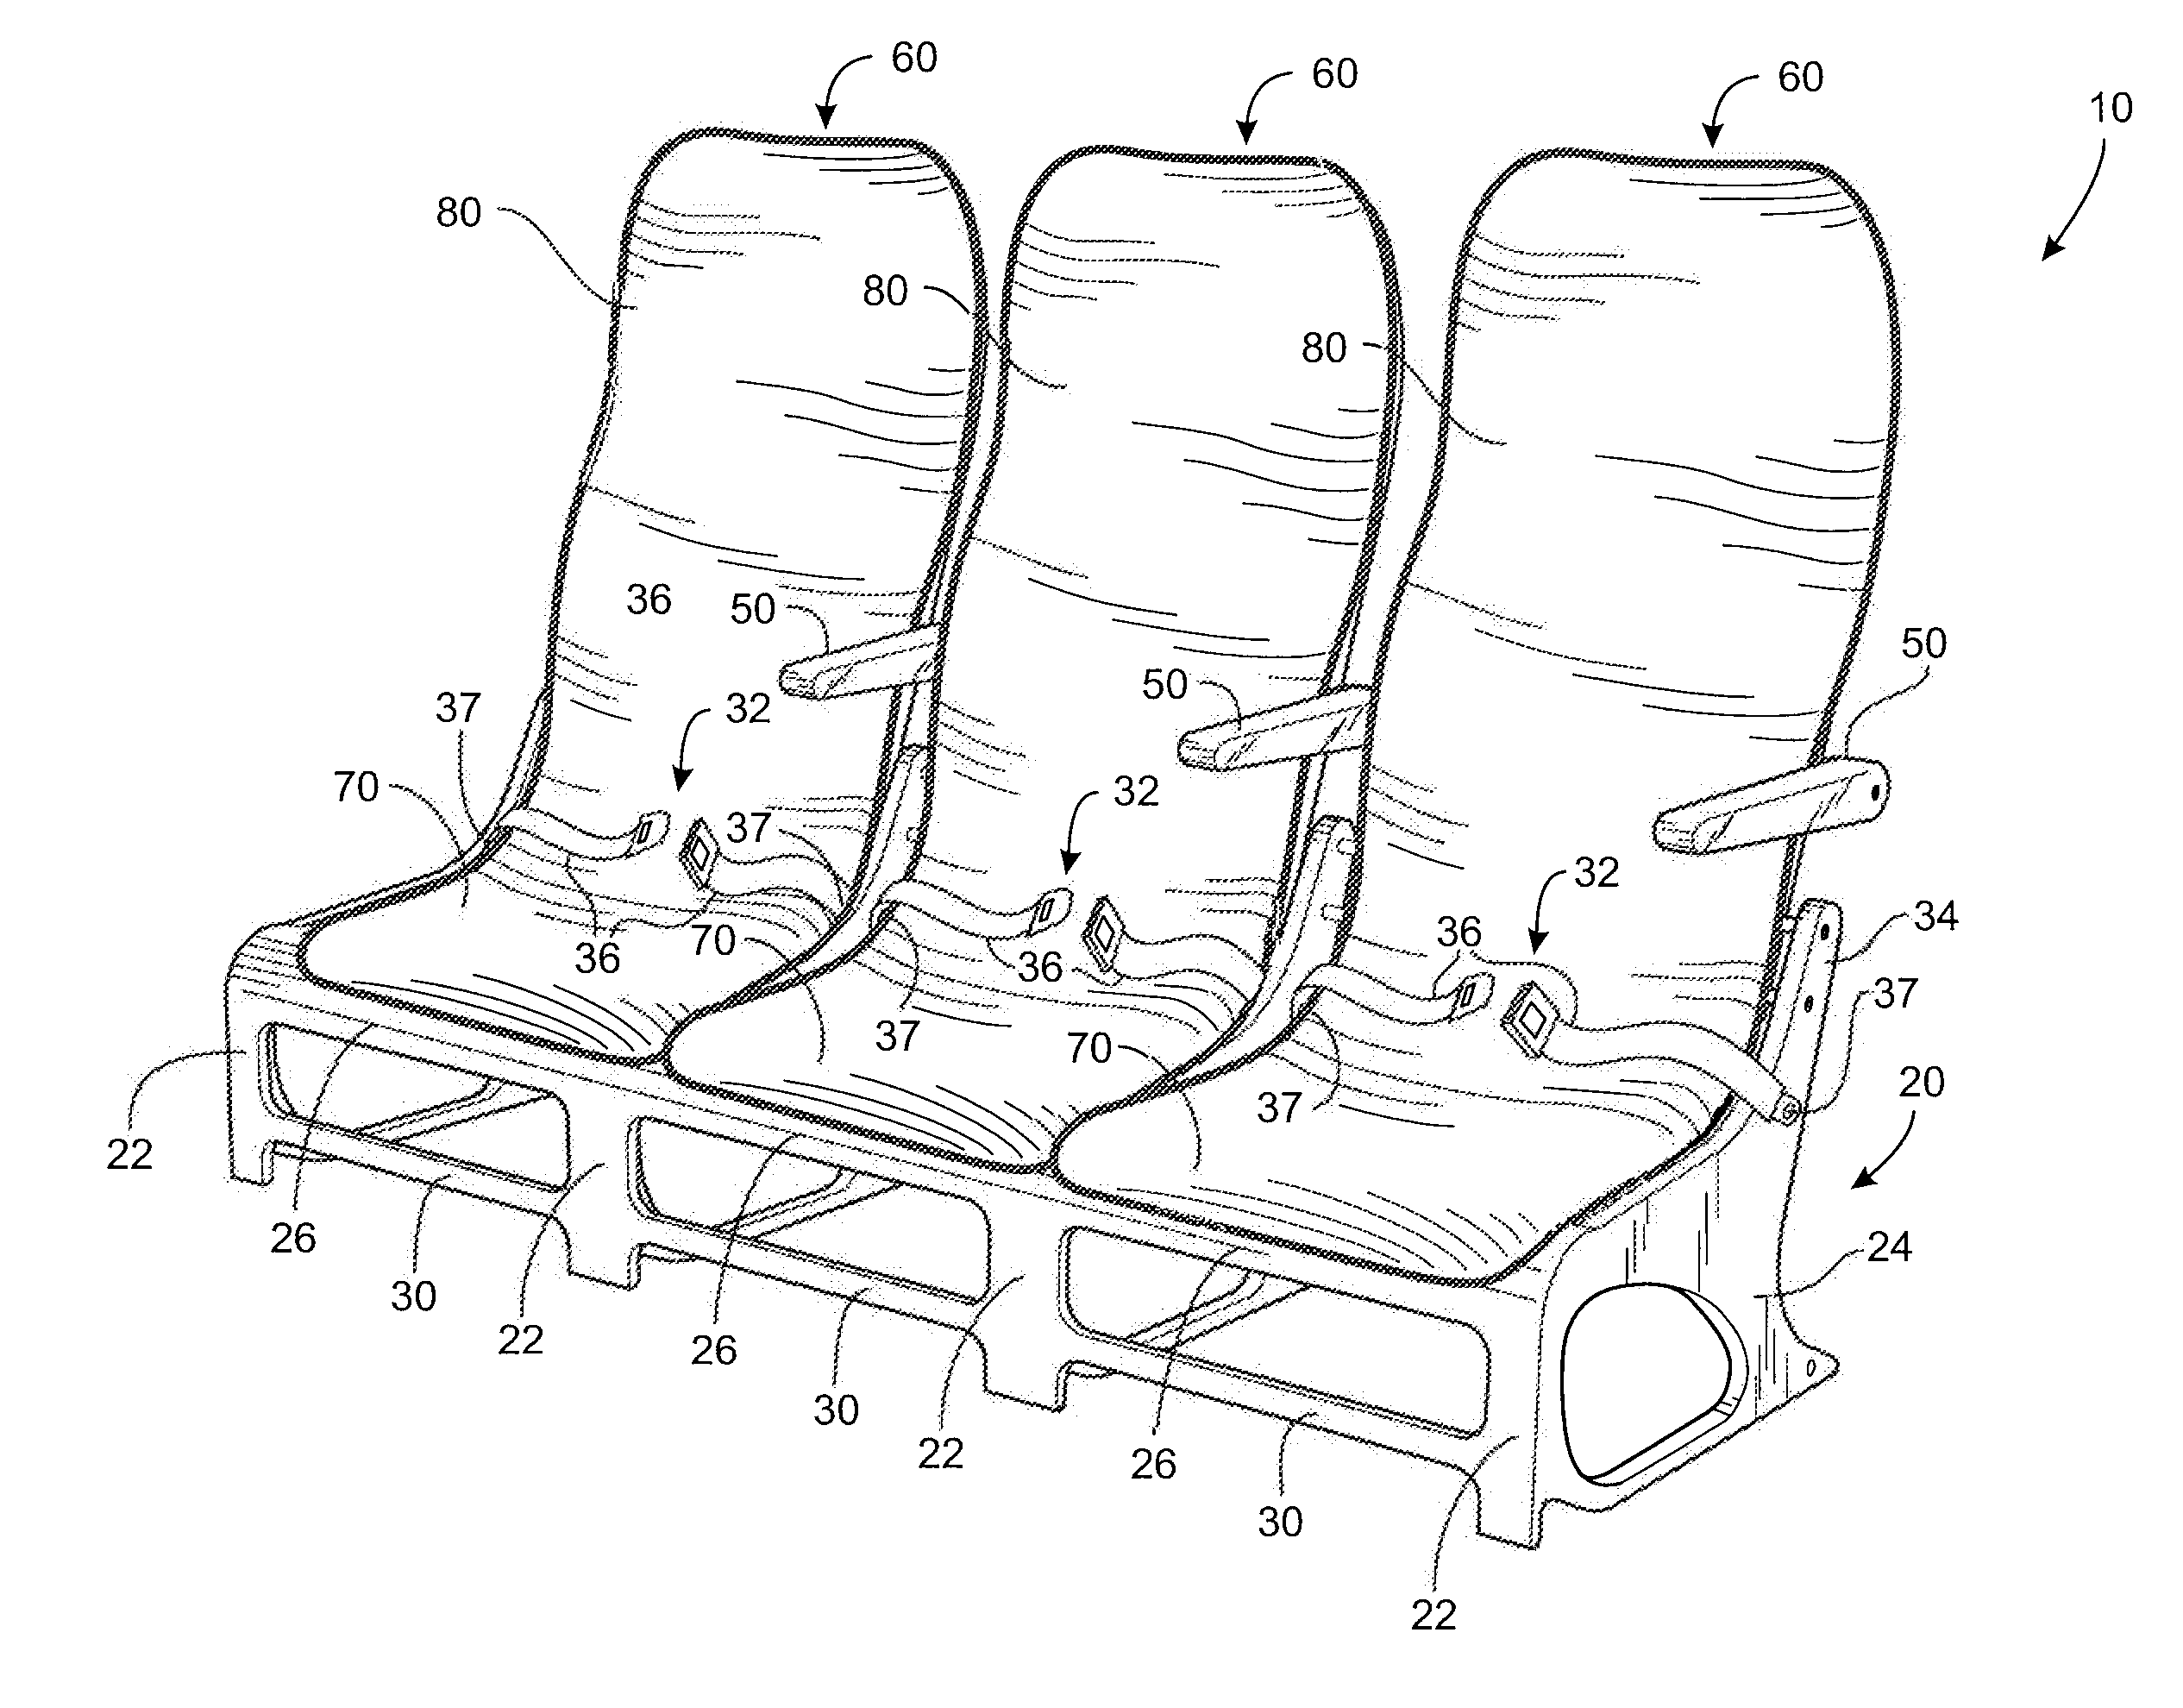 Aircraft seats and seating arrangement